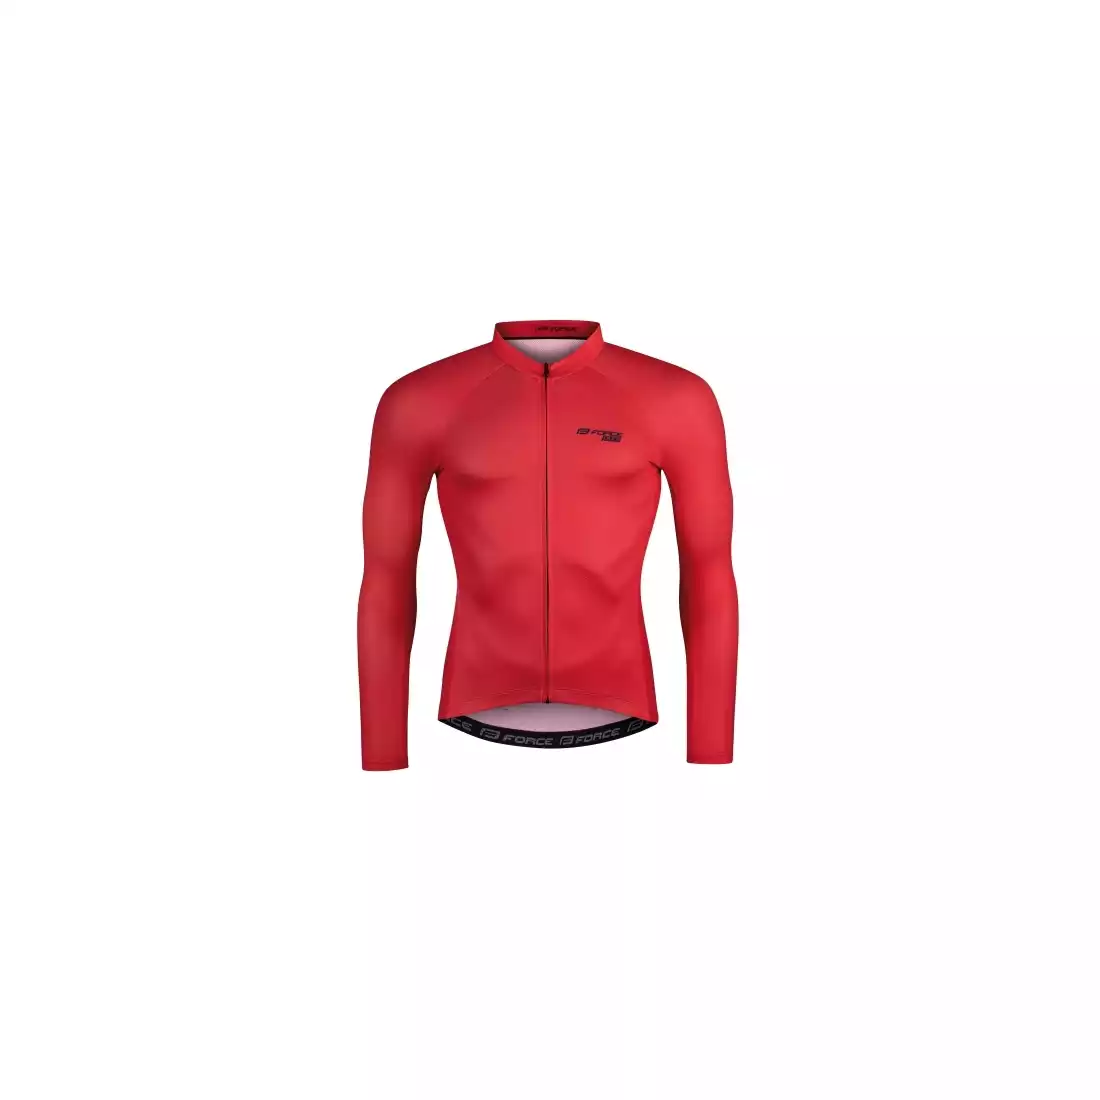 FORCE PURE Pánský cyklistický dres s dlouhým rukávem, červený